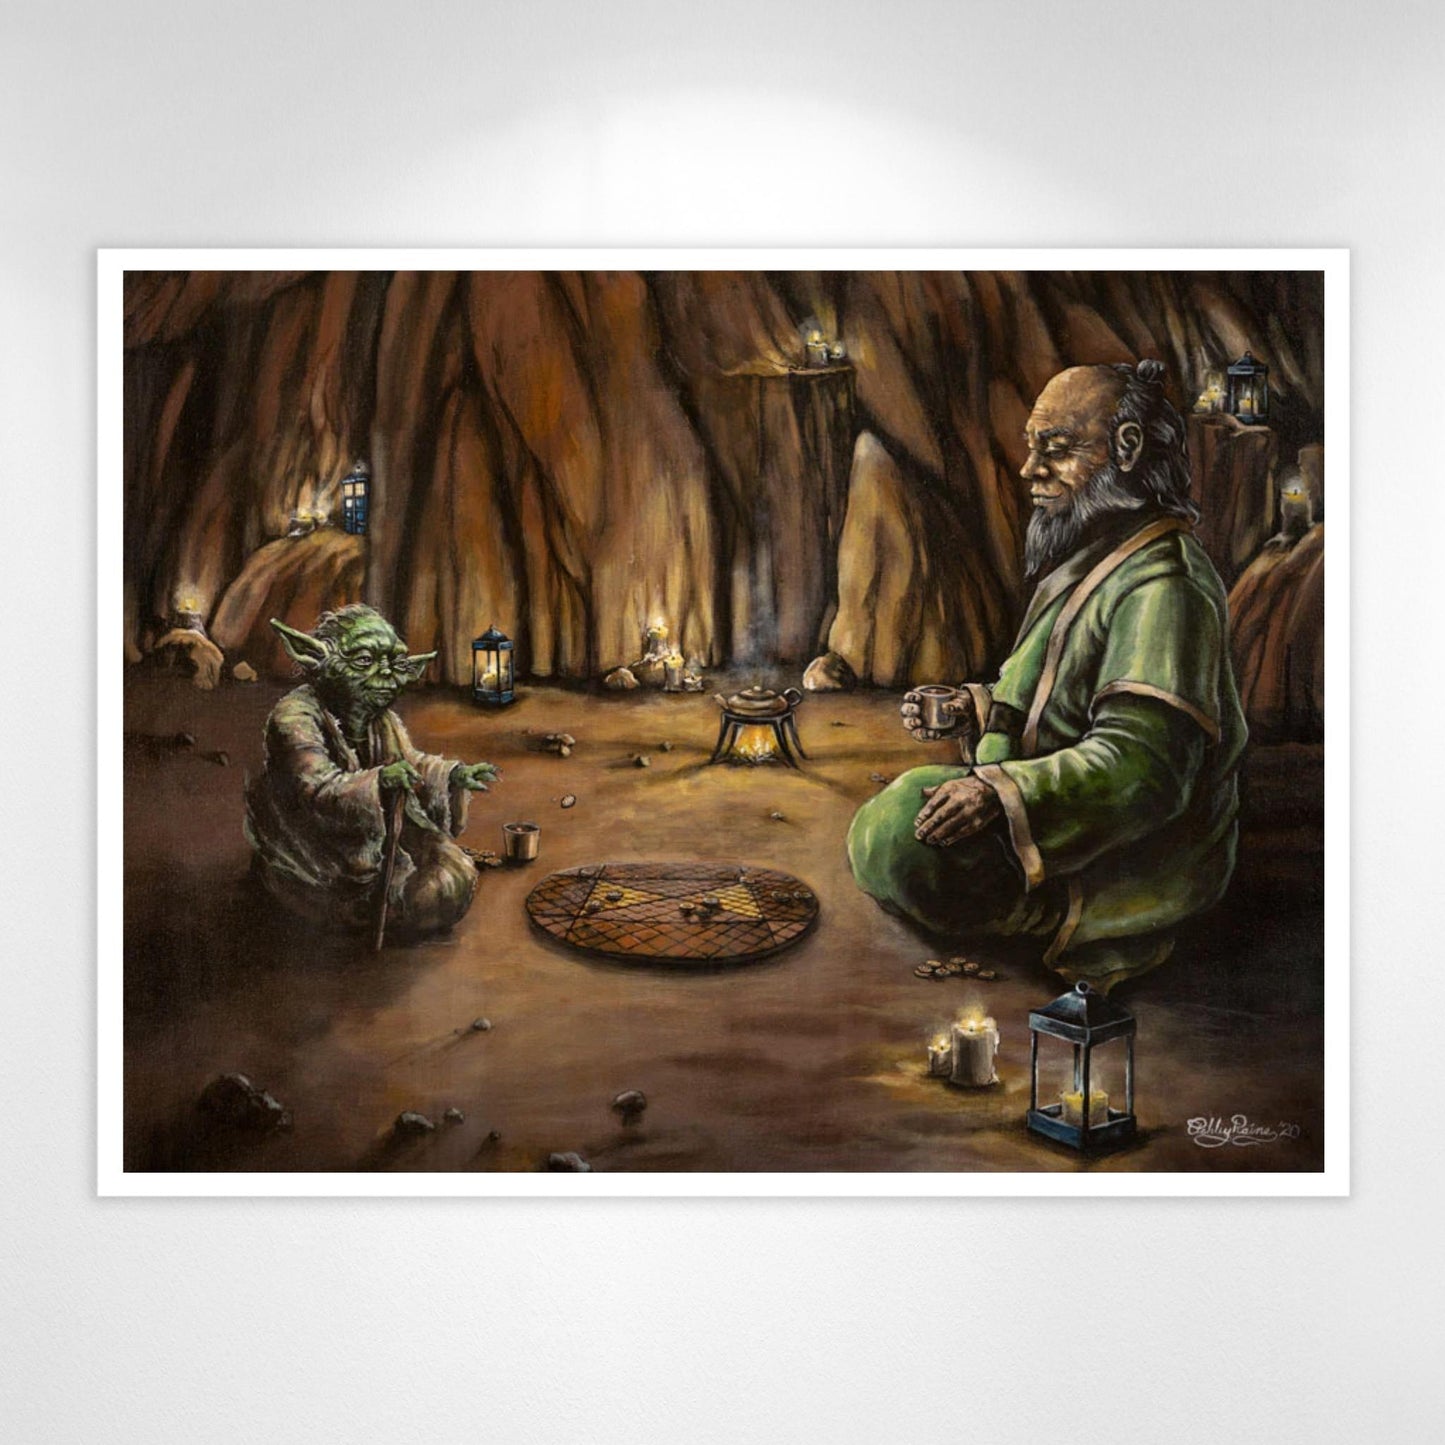 Yoda and Iroh "Tea with a Stranger" (Star Wars x Avatar: The Last Airbender) Parody Art Print